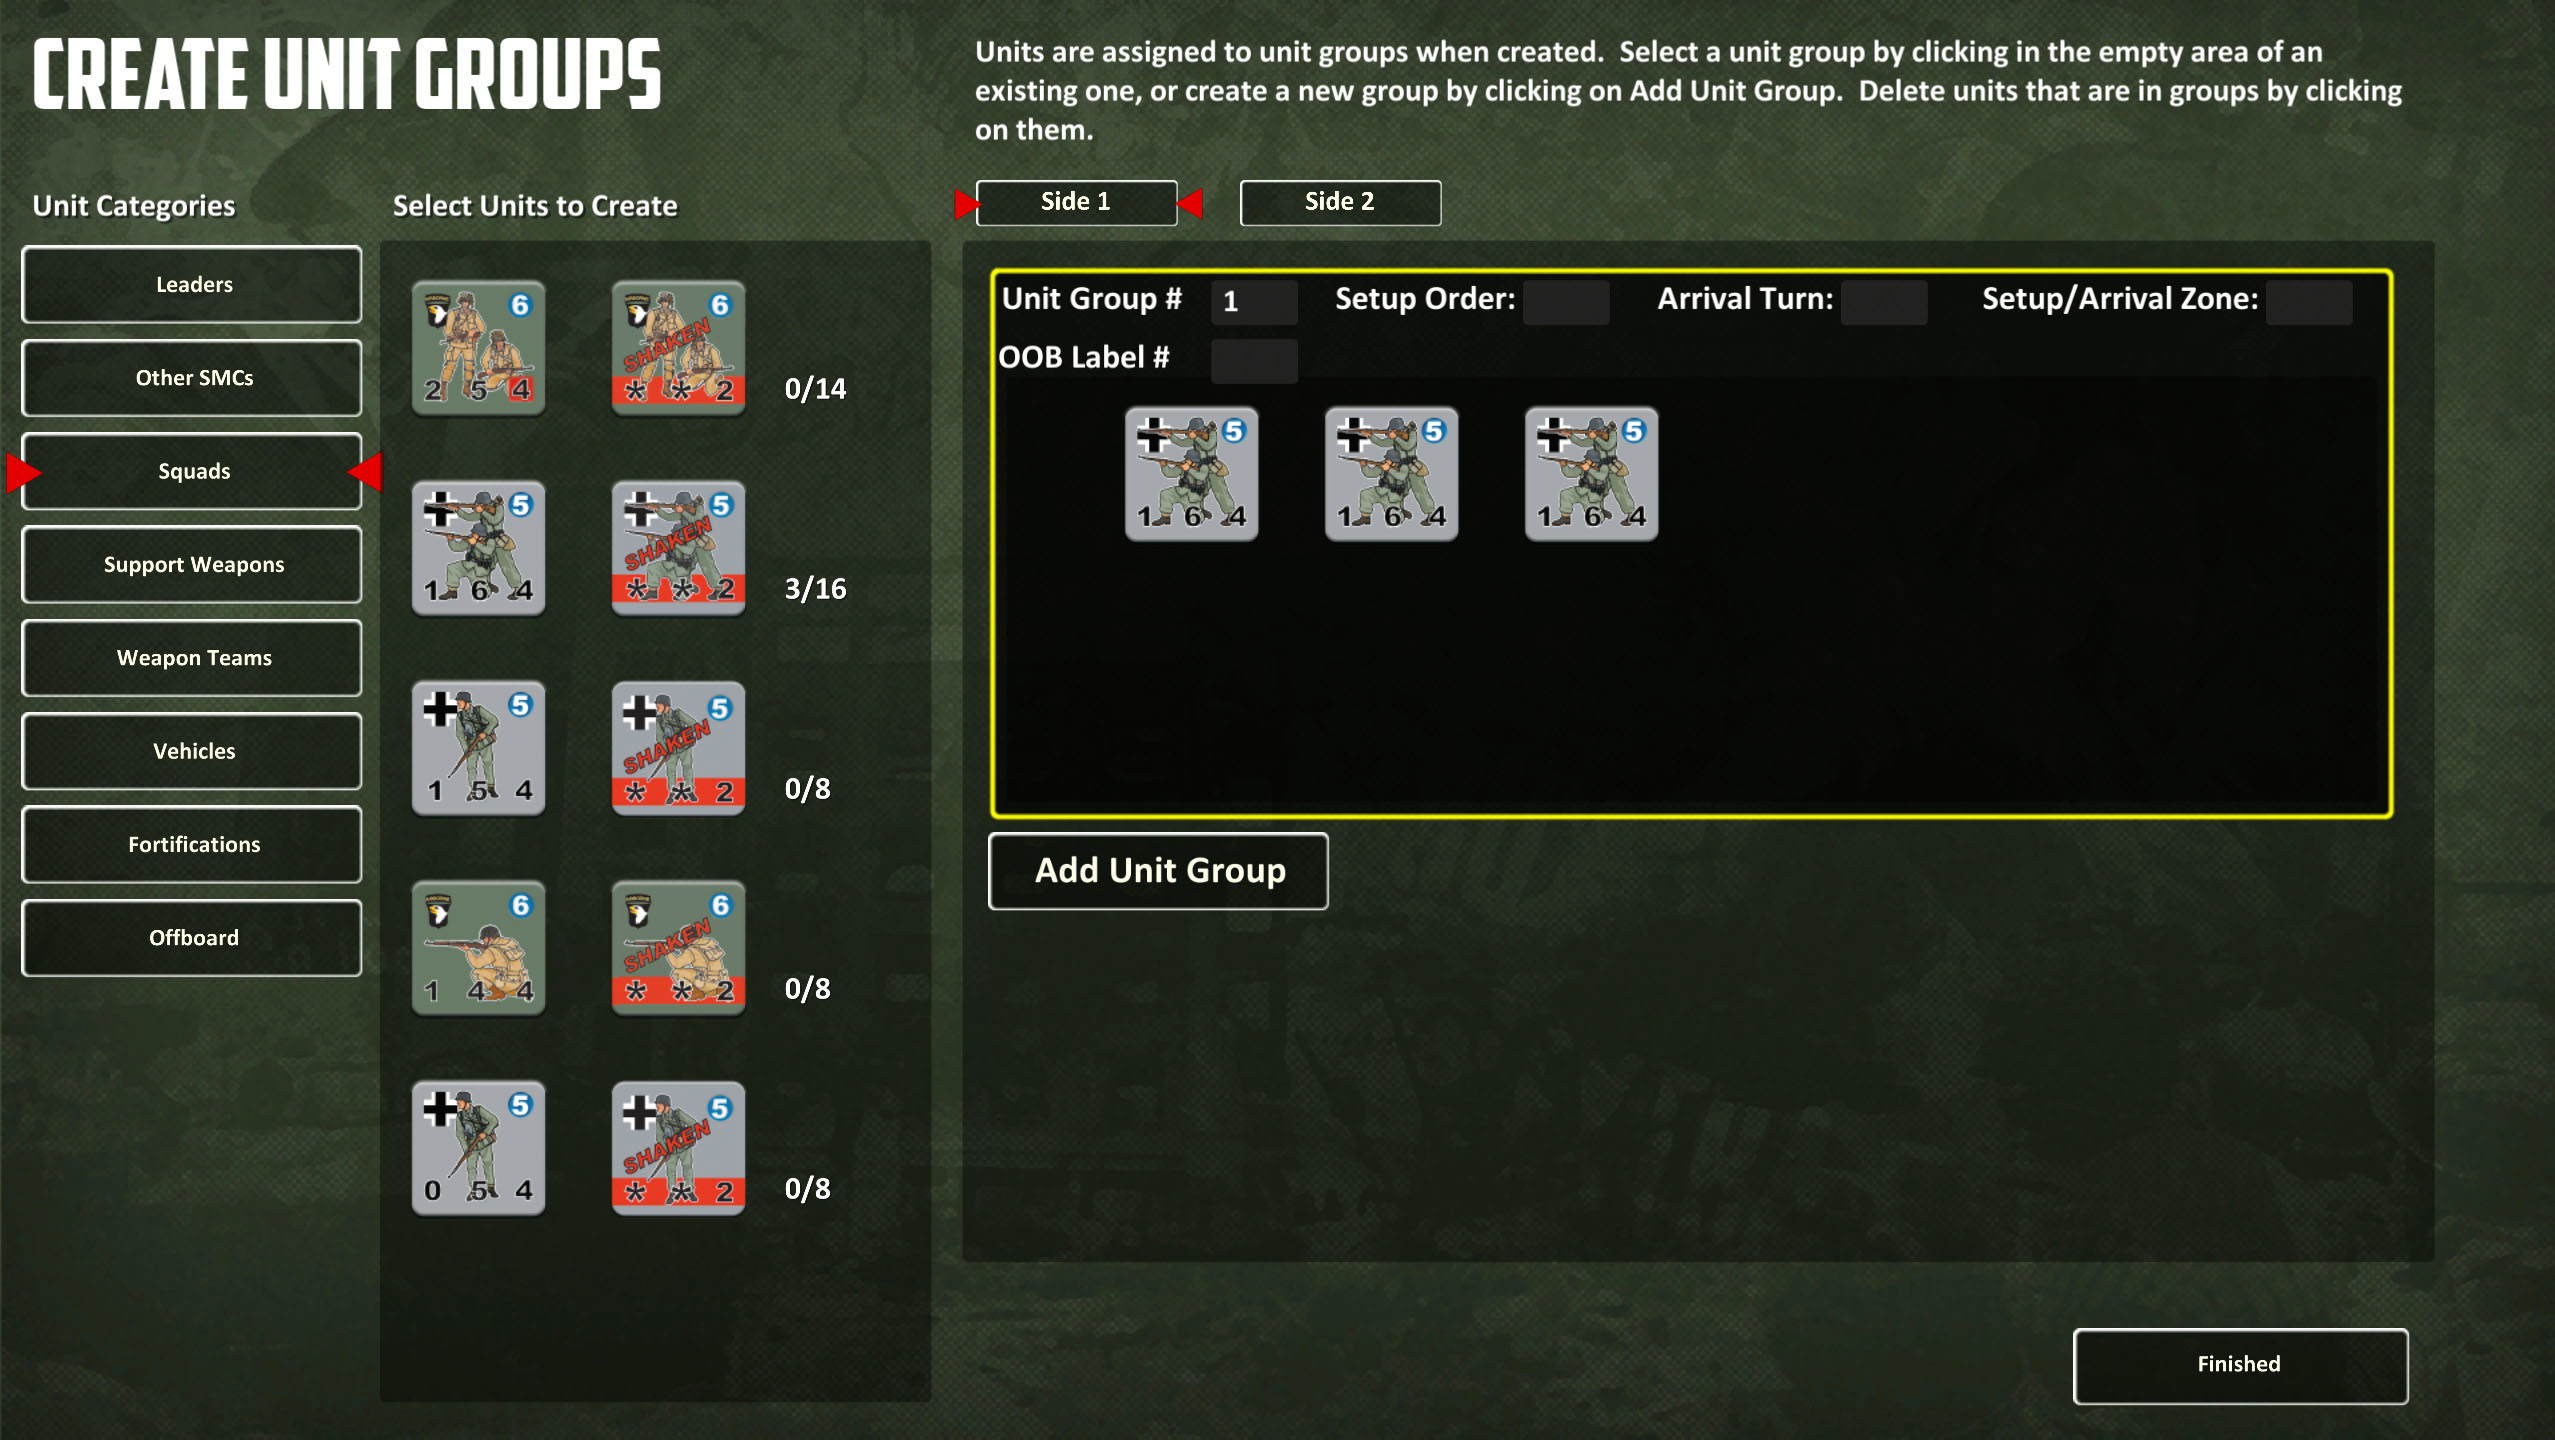 Lock 'n Load Tactical Digital: Battle Generator & Editor screenshot